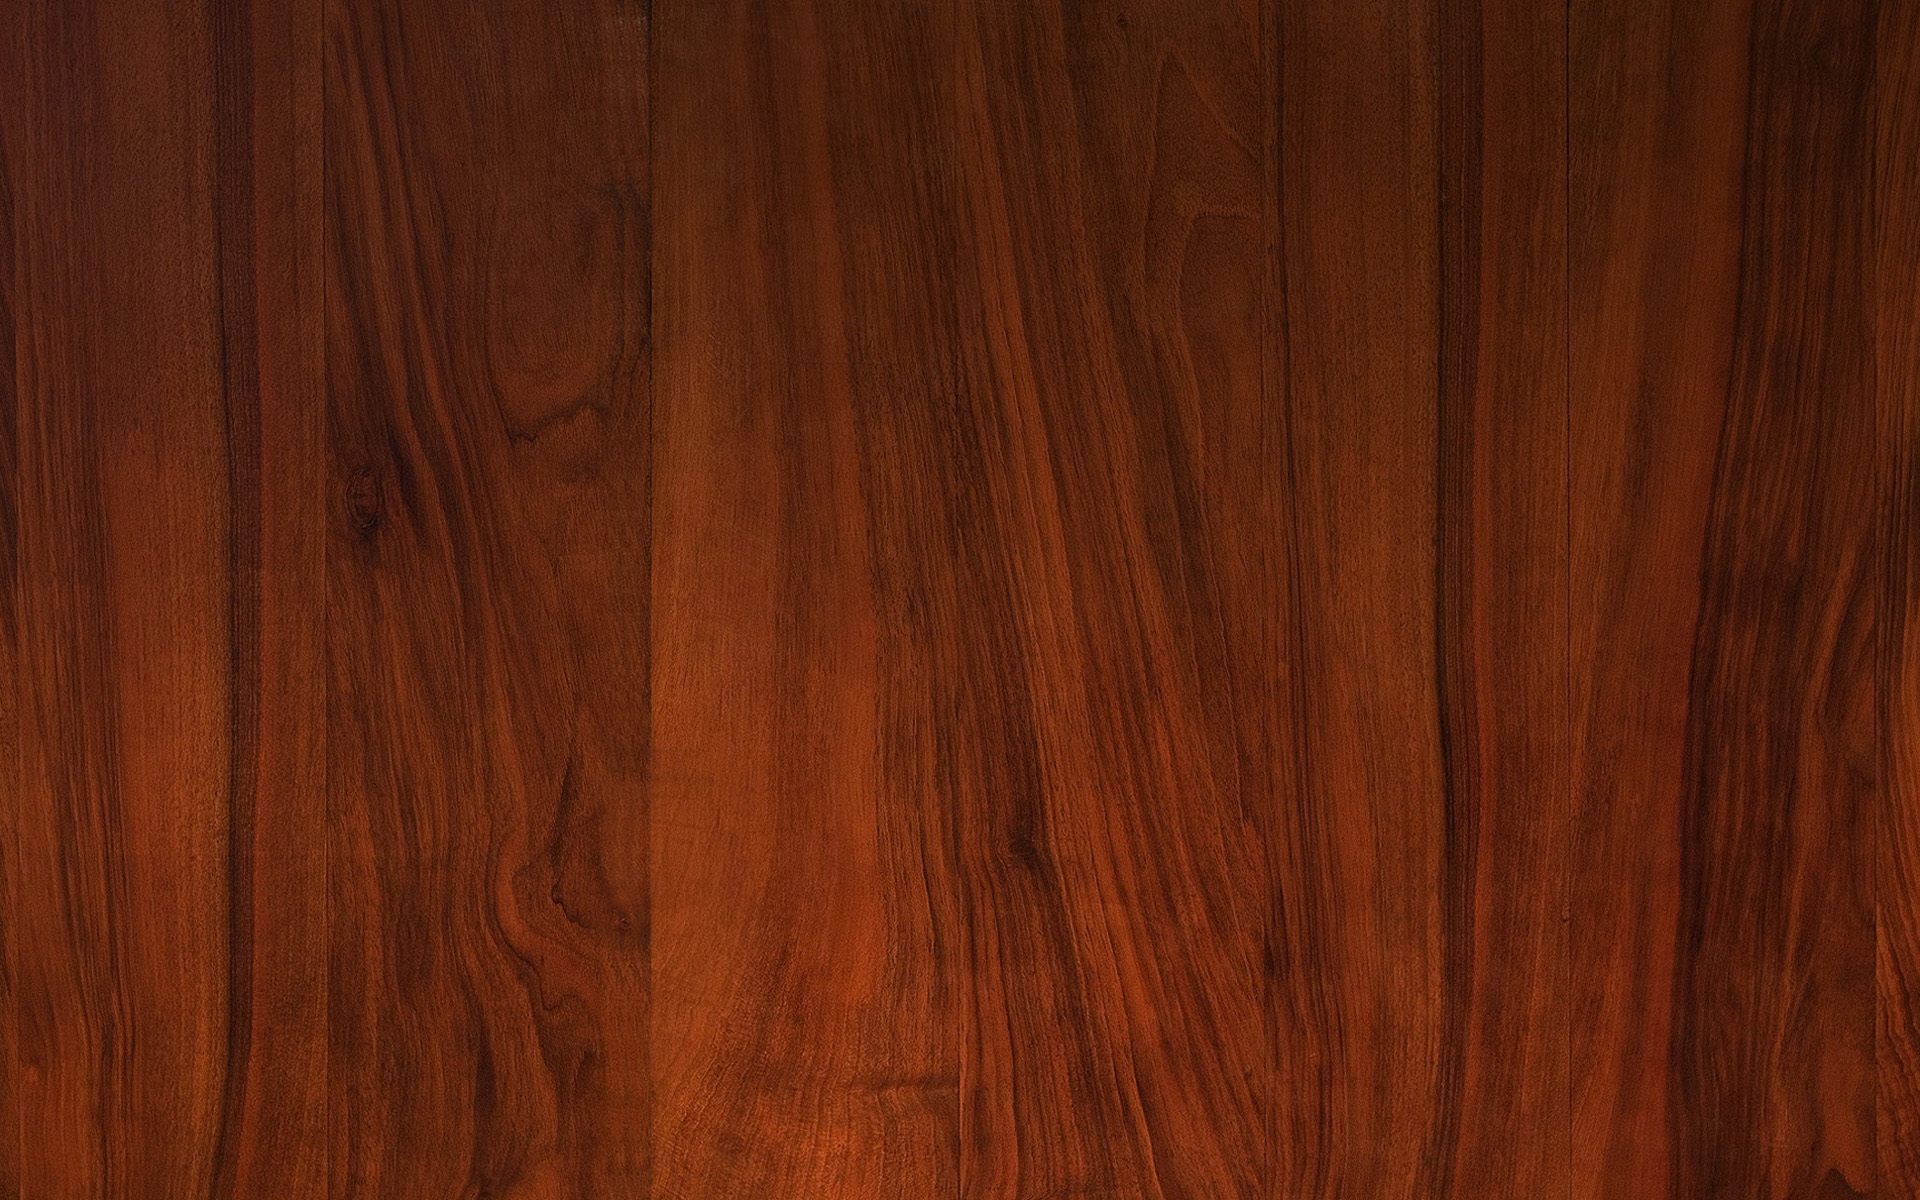 Wood grain wallpaper 01, HD Desktop Backgrounds